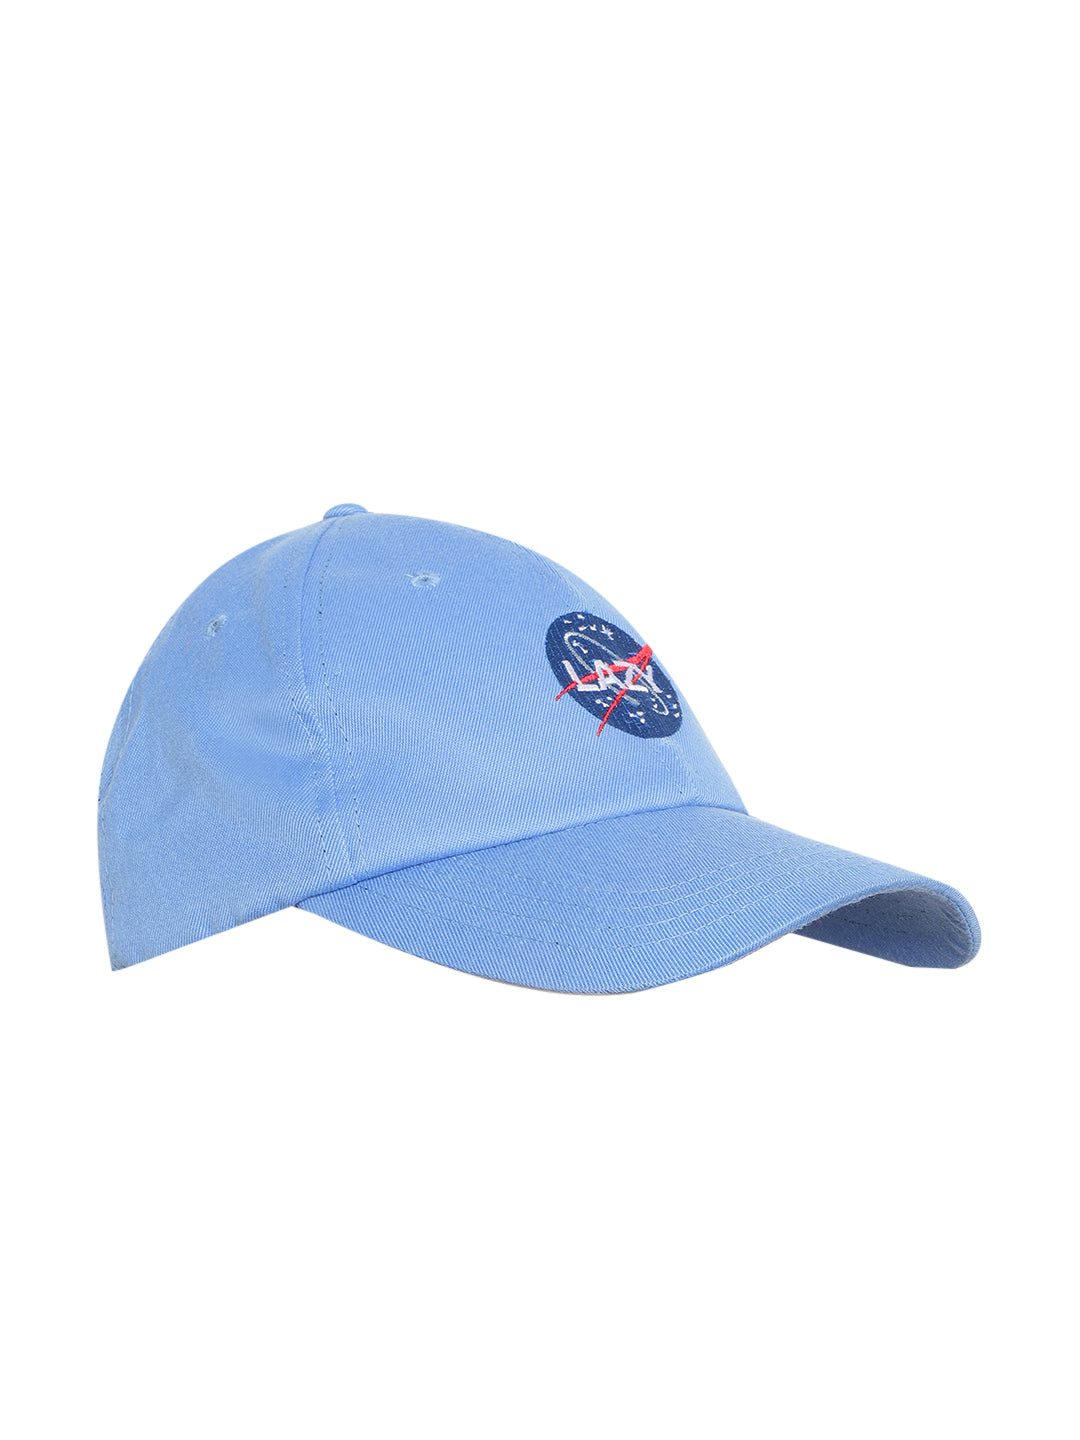 Blueberry Blue NASA LAZY embroidered baseball cap